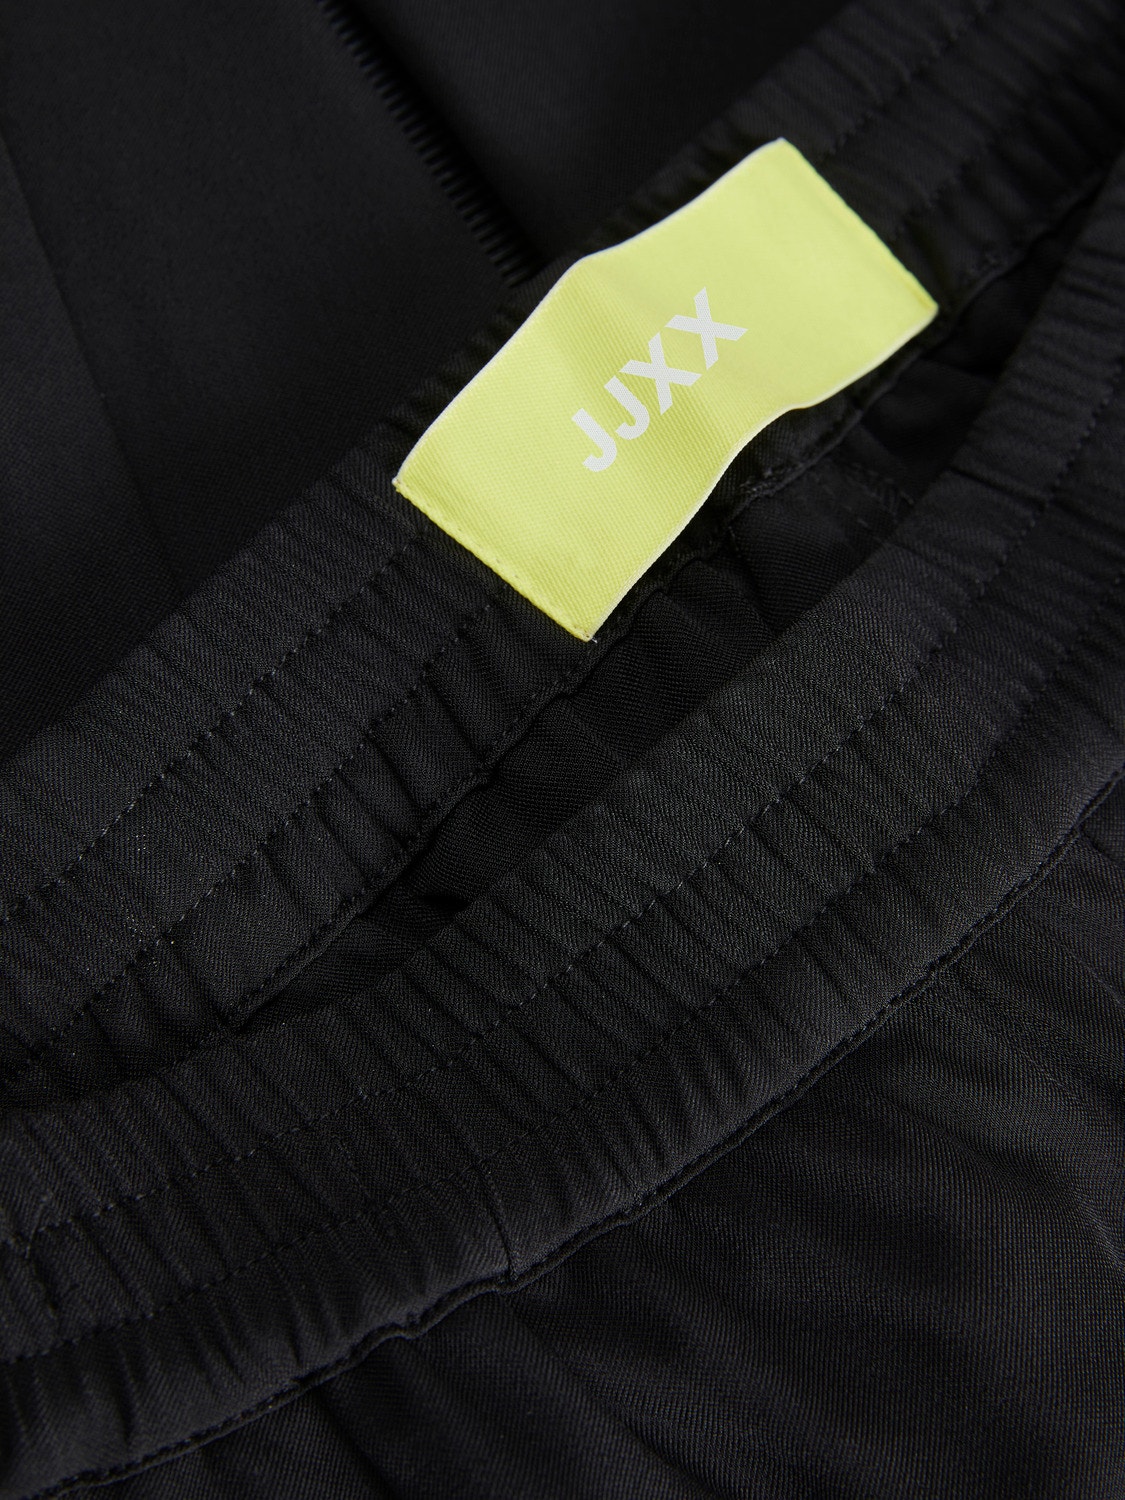 JJXX JXPOPPY Classic trousers -Black - 12200751